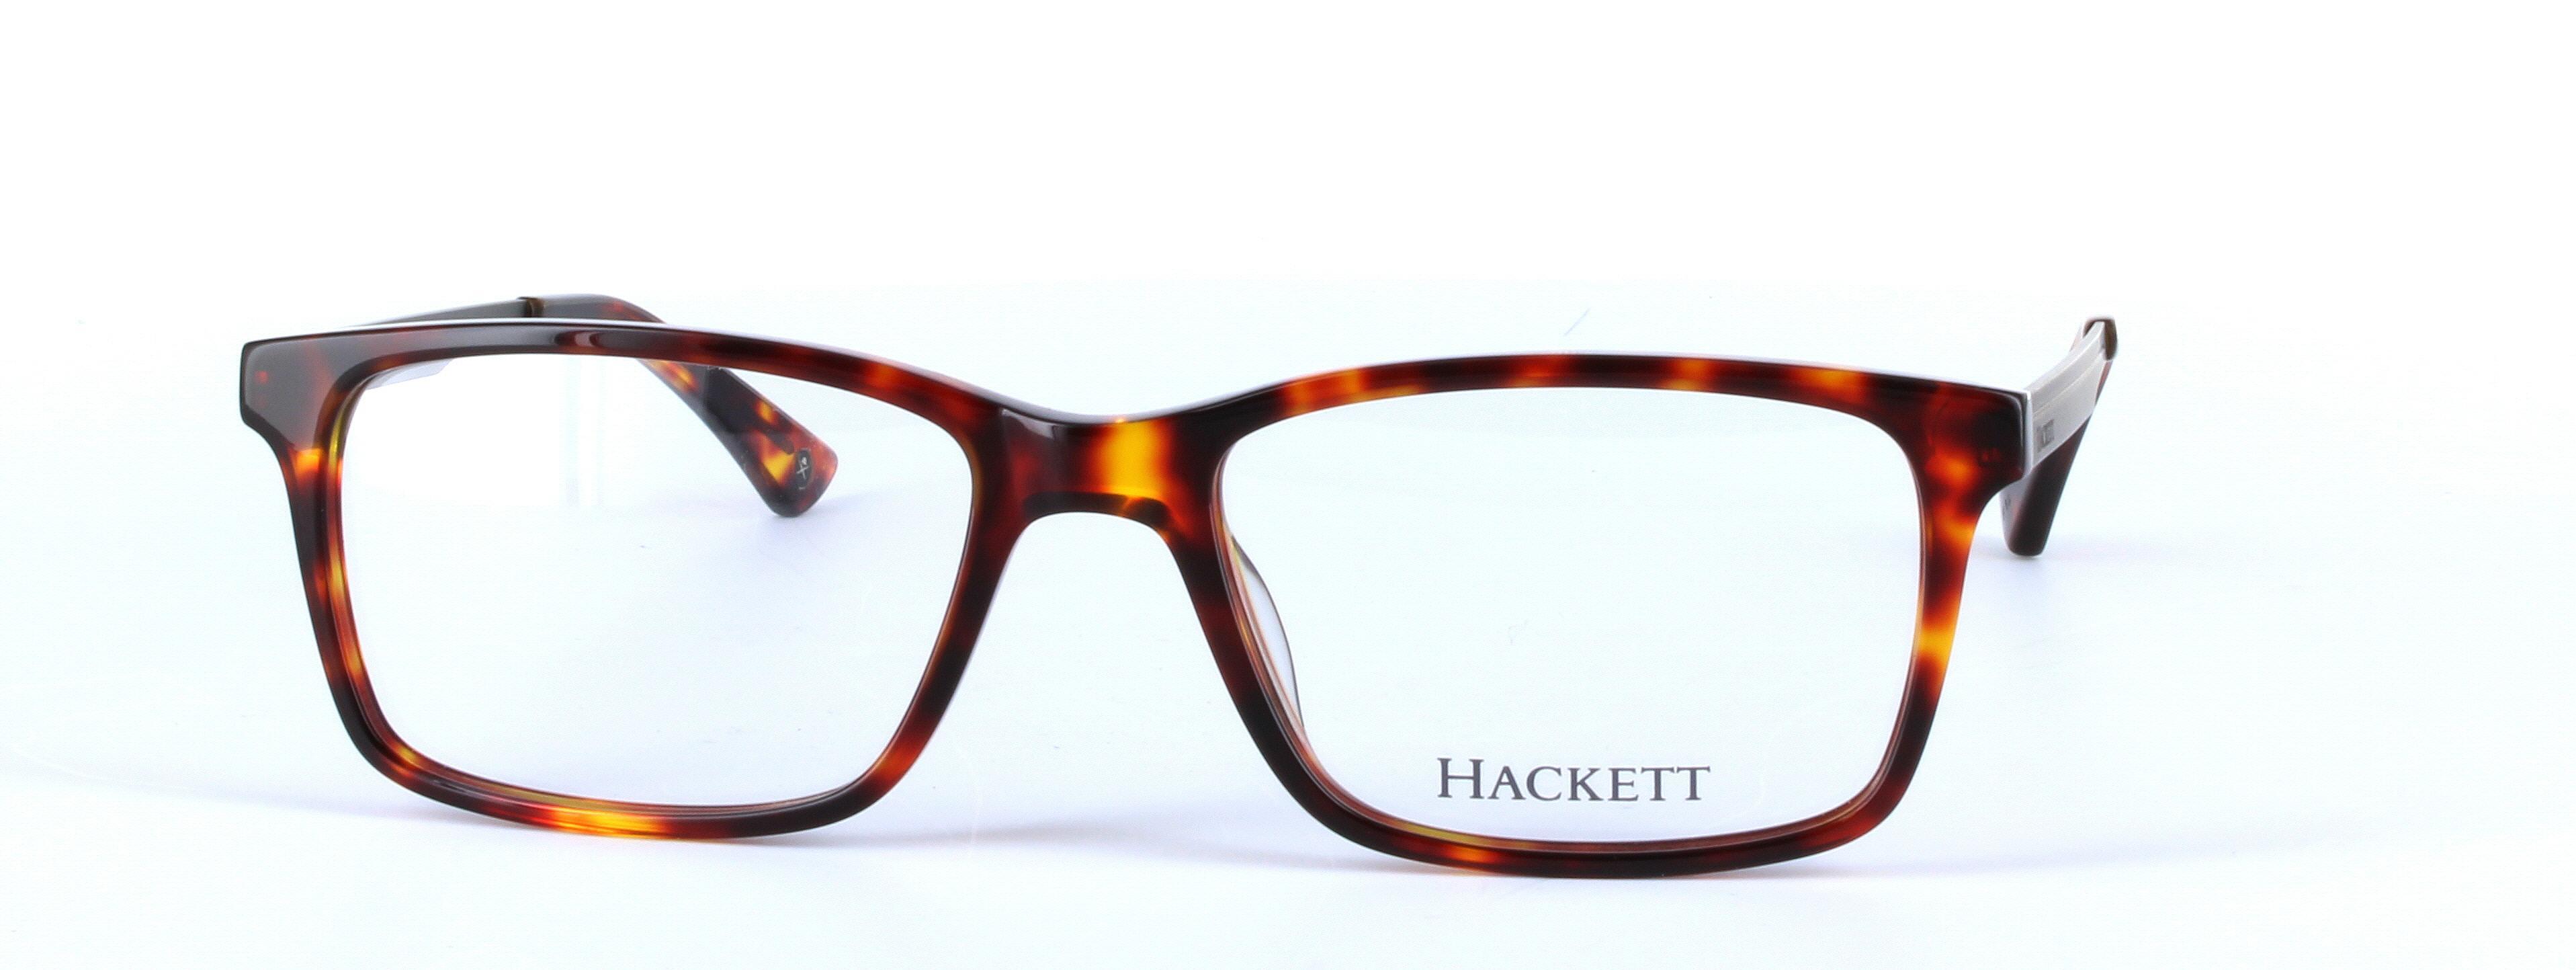 HACKETT (HEK1162-101) Brown Full Rim Oval Square Acetate Glasses - Image View 5